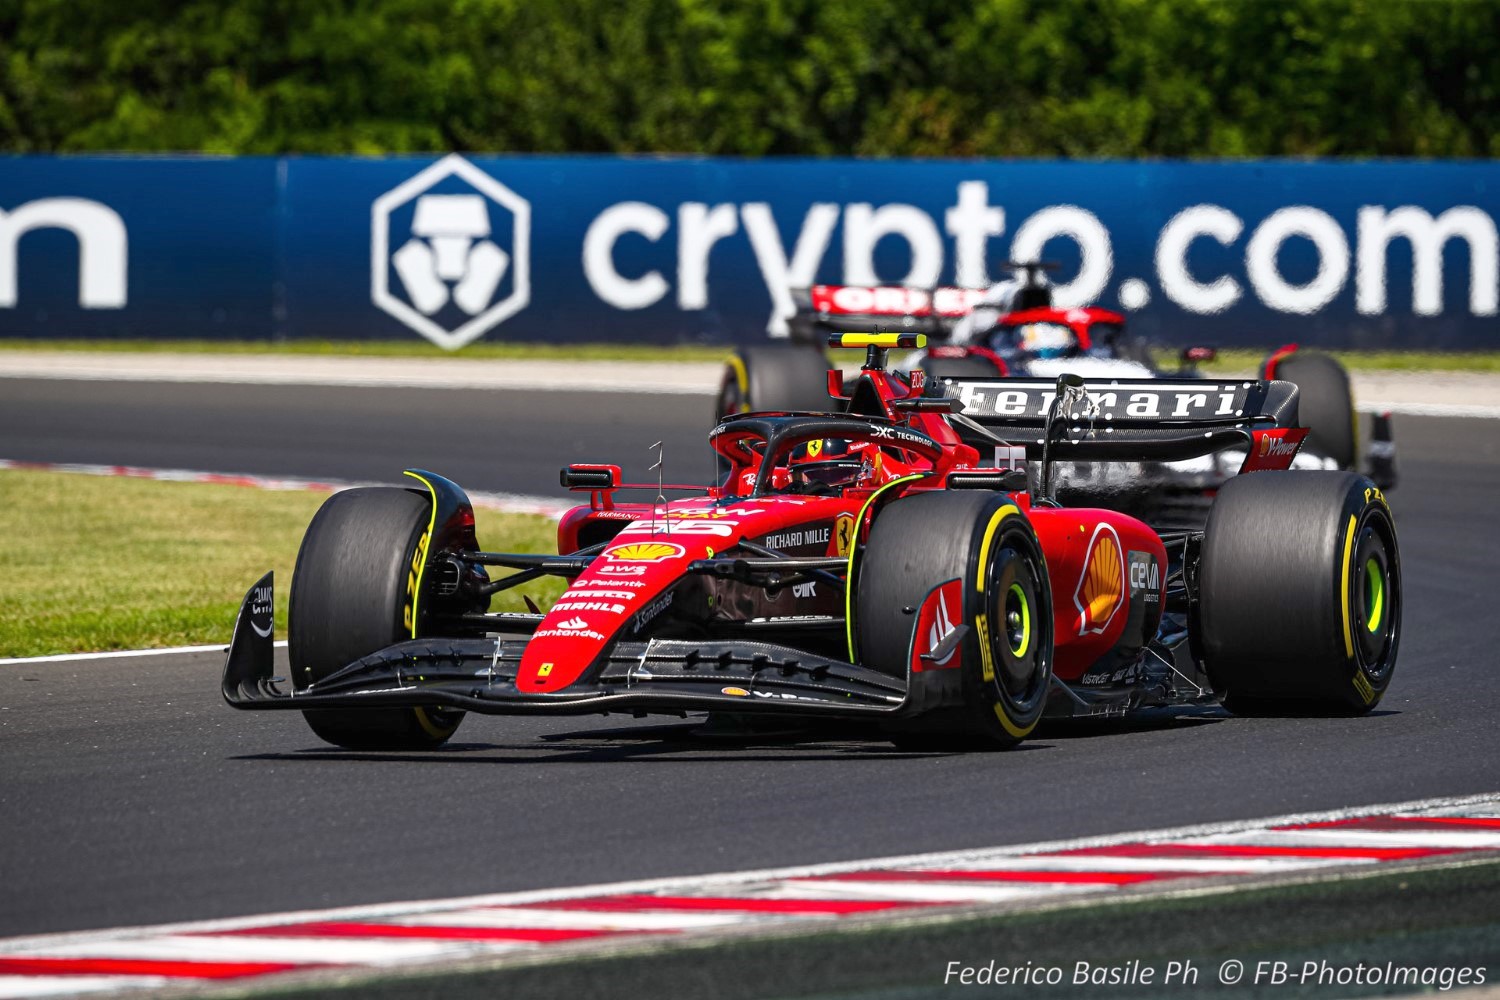 #55 Carlos Sainz, (ESP) Scuderia Ferrari during the Hungarian GP, Budapest 20-23 July 2023 at the Hungaroring, Formula 1 World championship 2023.